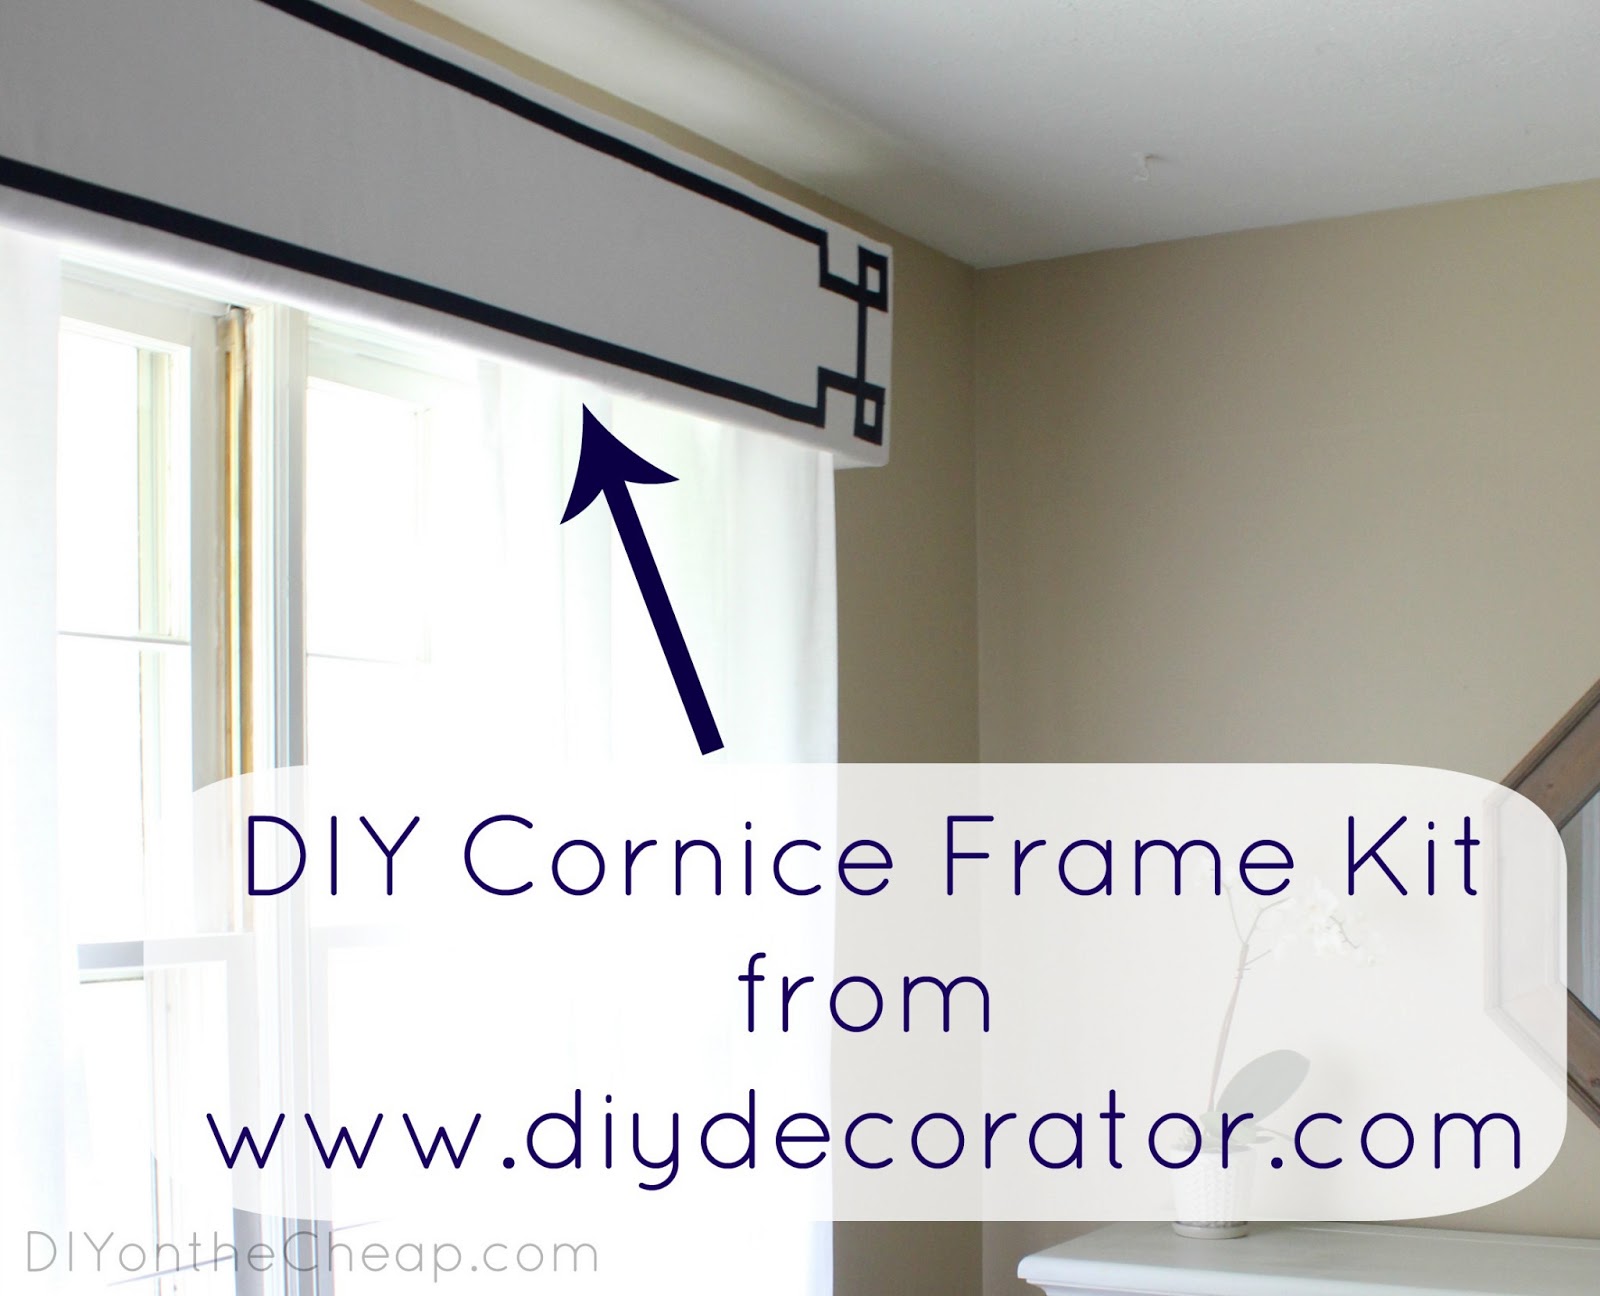 New Window Treatments Diy Cornice Frame Kit Review Erin Spain